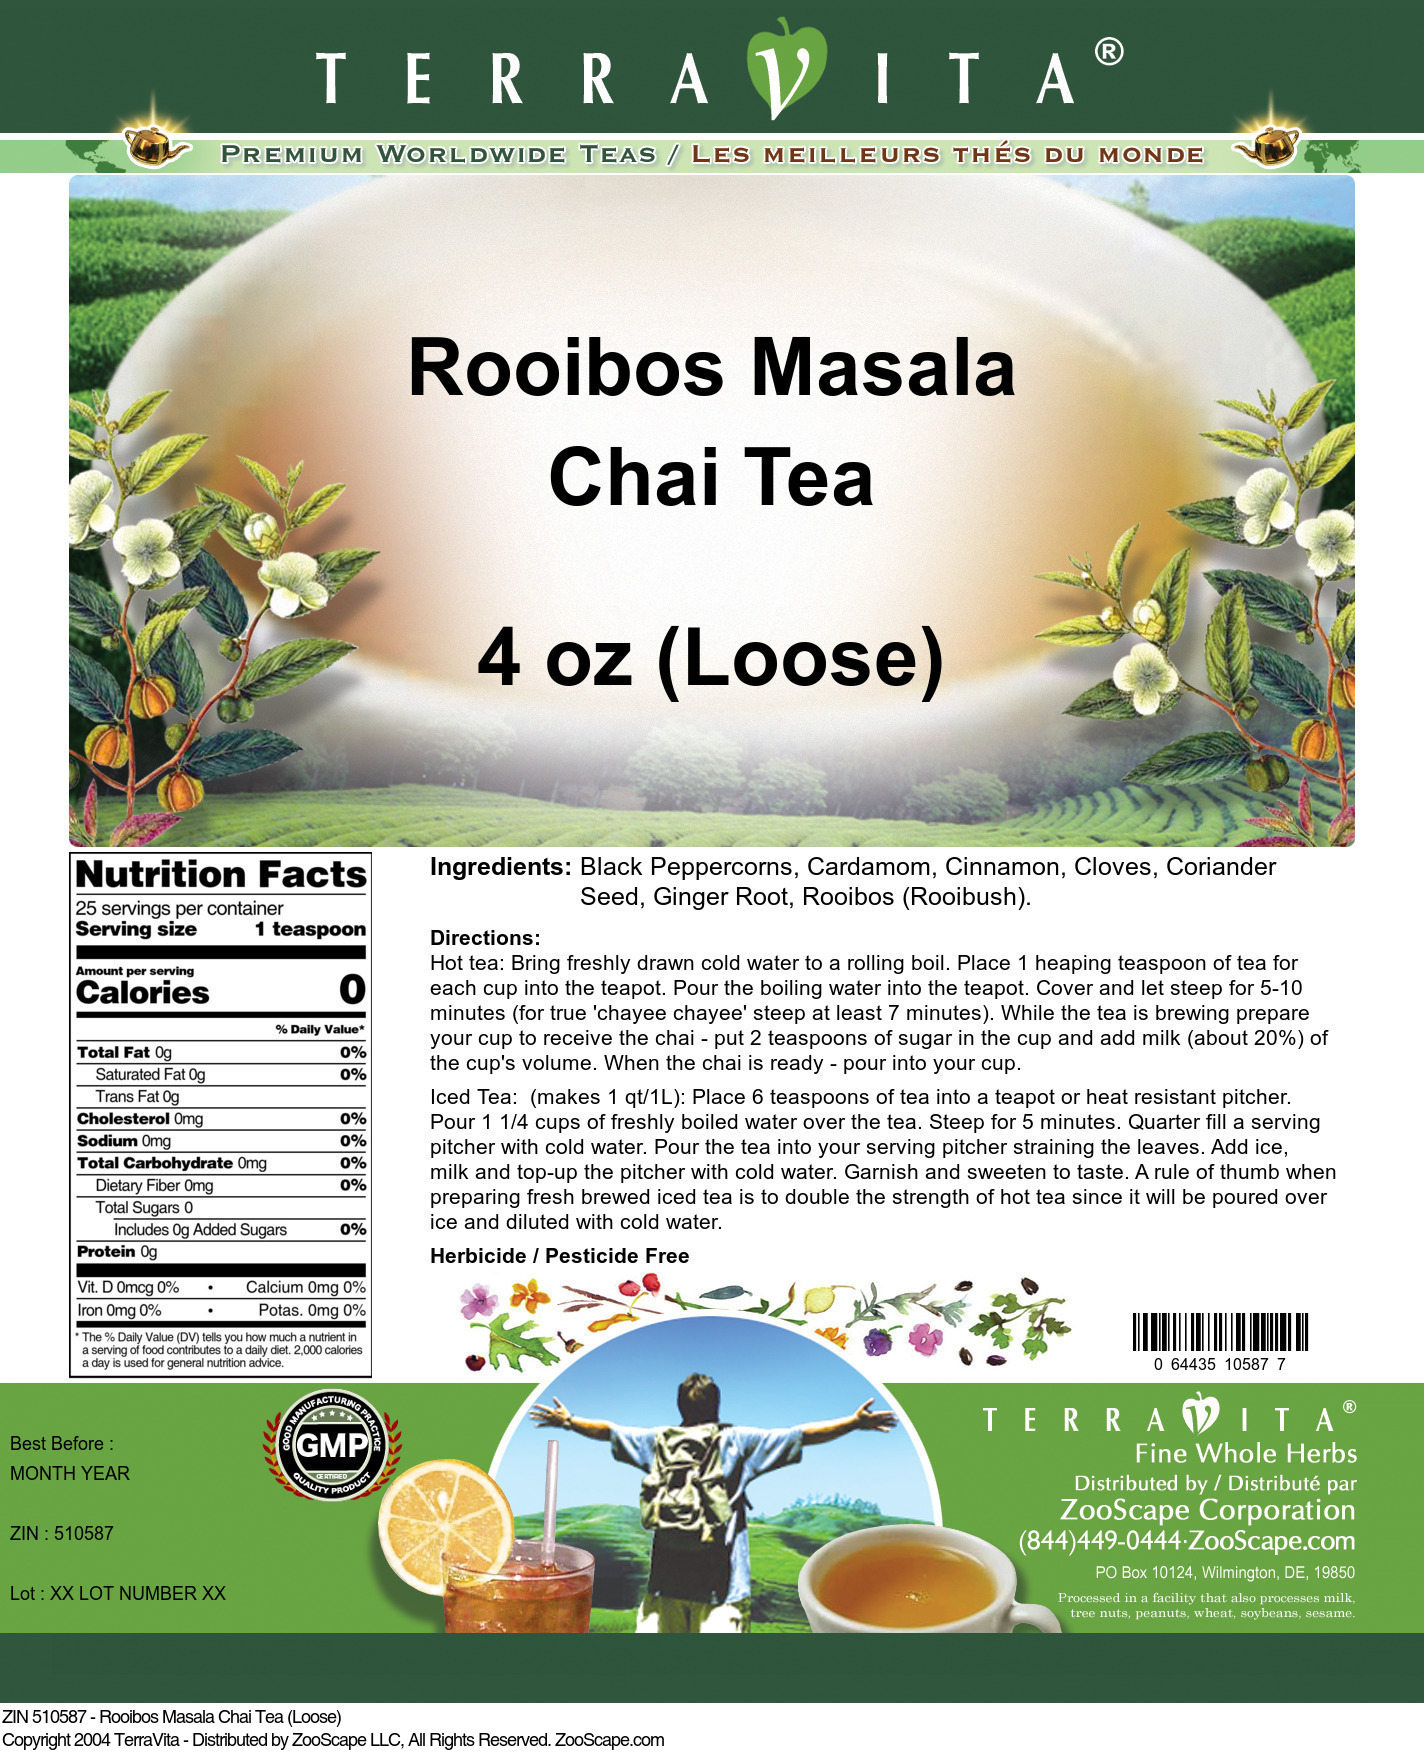 Rooibos Masala Chai Tea (Loose) - Label